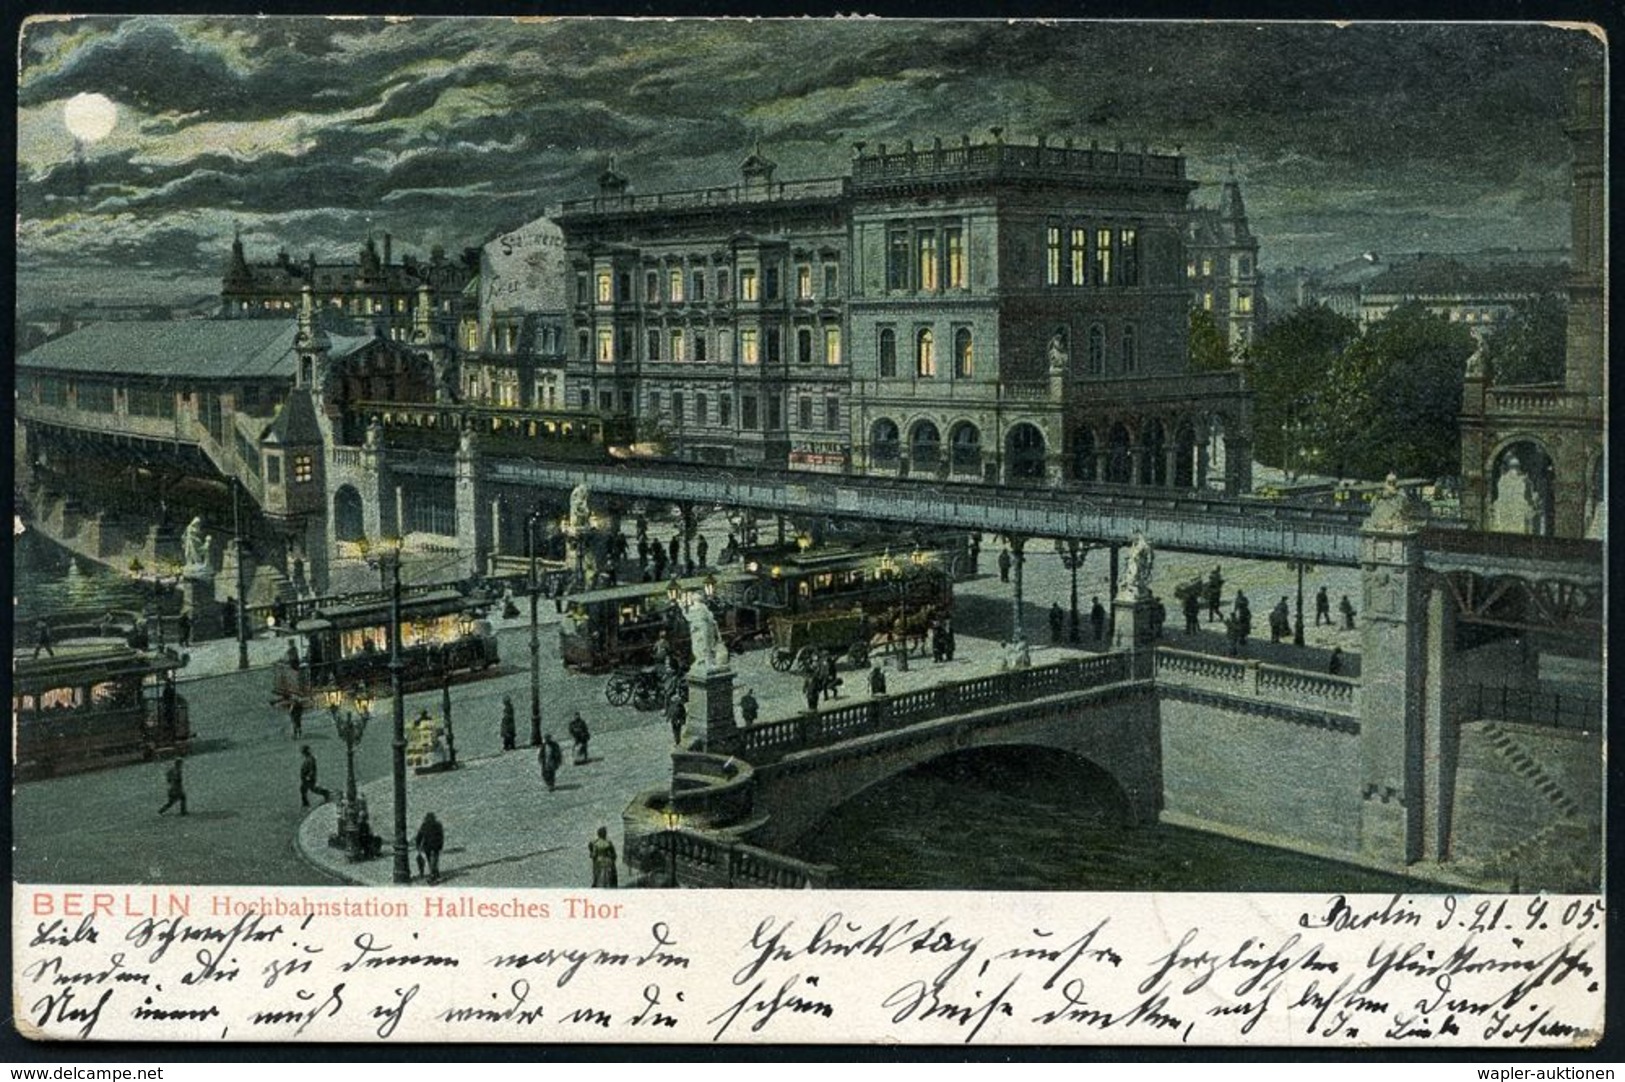 UNTERGRUNDBAHN /U-BAHN : Berlin-Kreuzberg 1908/20 U-Bahnhof Hallesches Tor, 9 verschiedene Color-Foto-Ak. , meist gebr.,